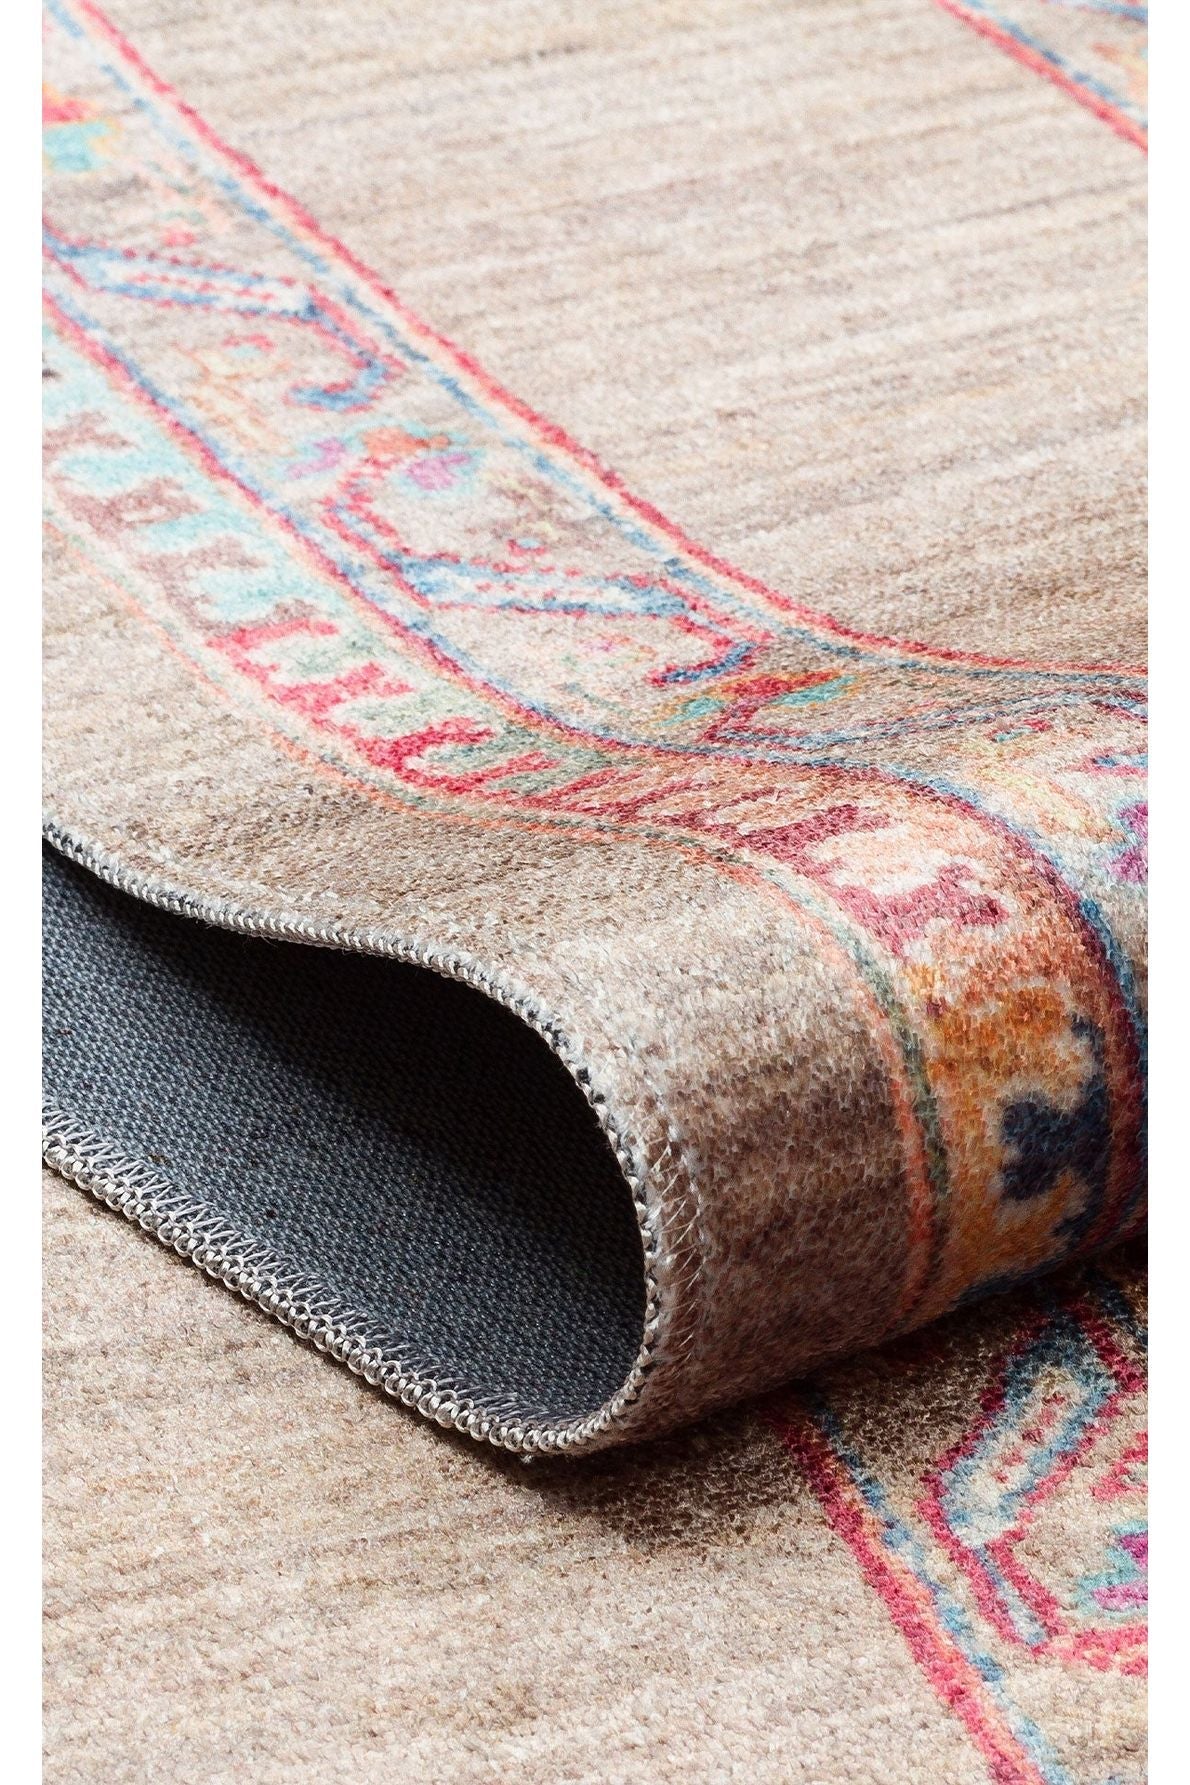 #Turkish_Carpets_Rugs# #Modern_Carpets# #Abrash_Carpets#User-Friendly Washable Anti-Slippery Made Carpets With Antique DesignsAtk 07 Olive